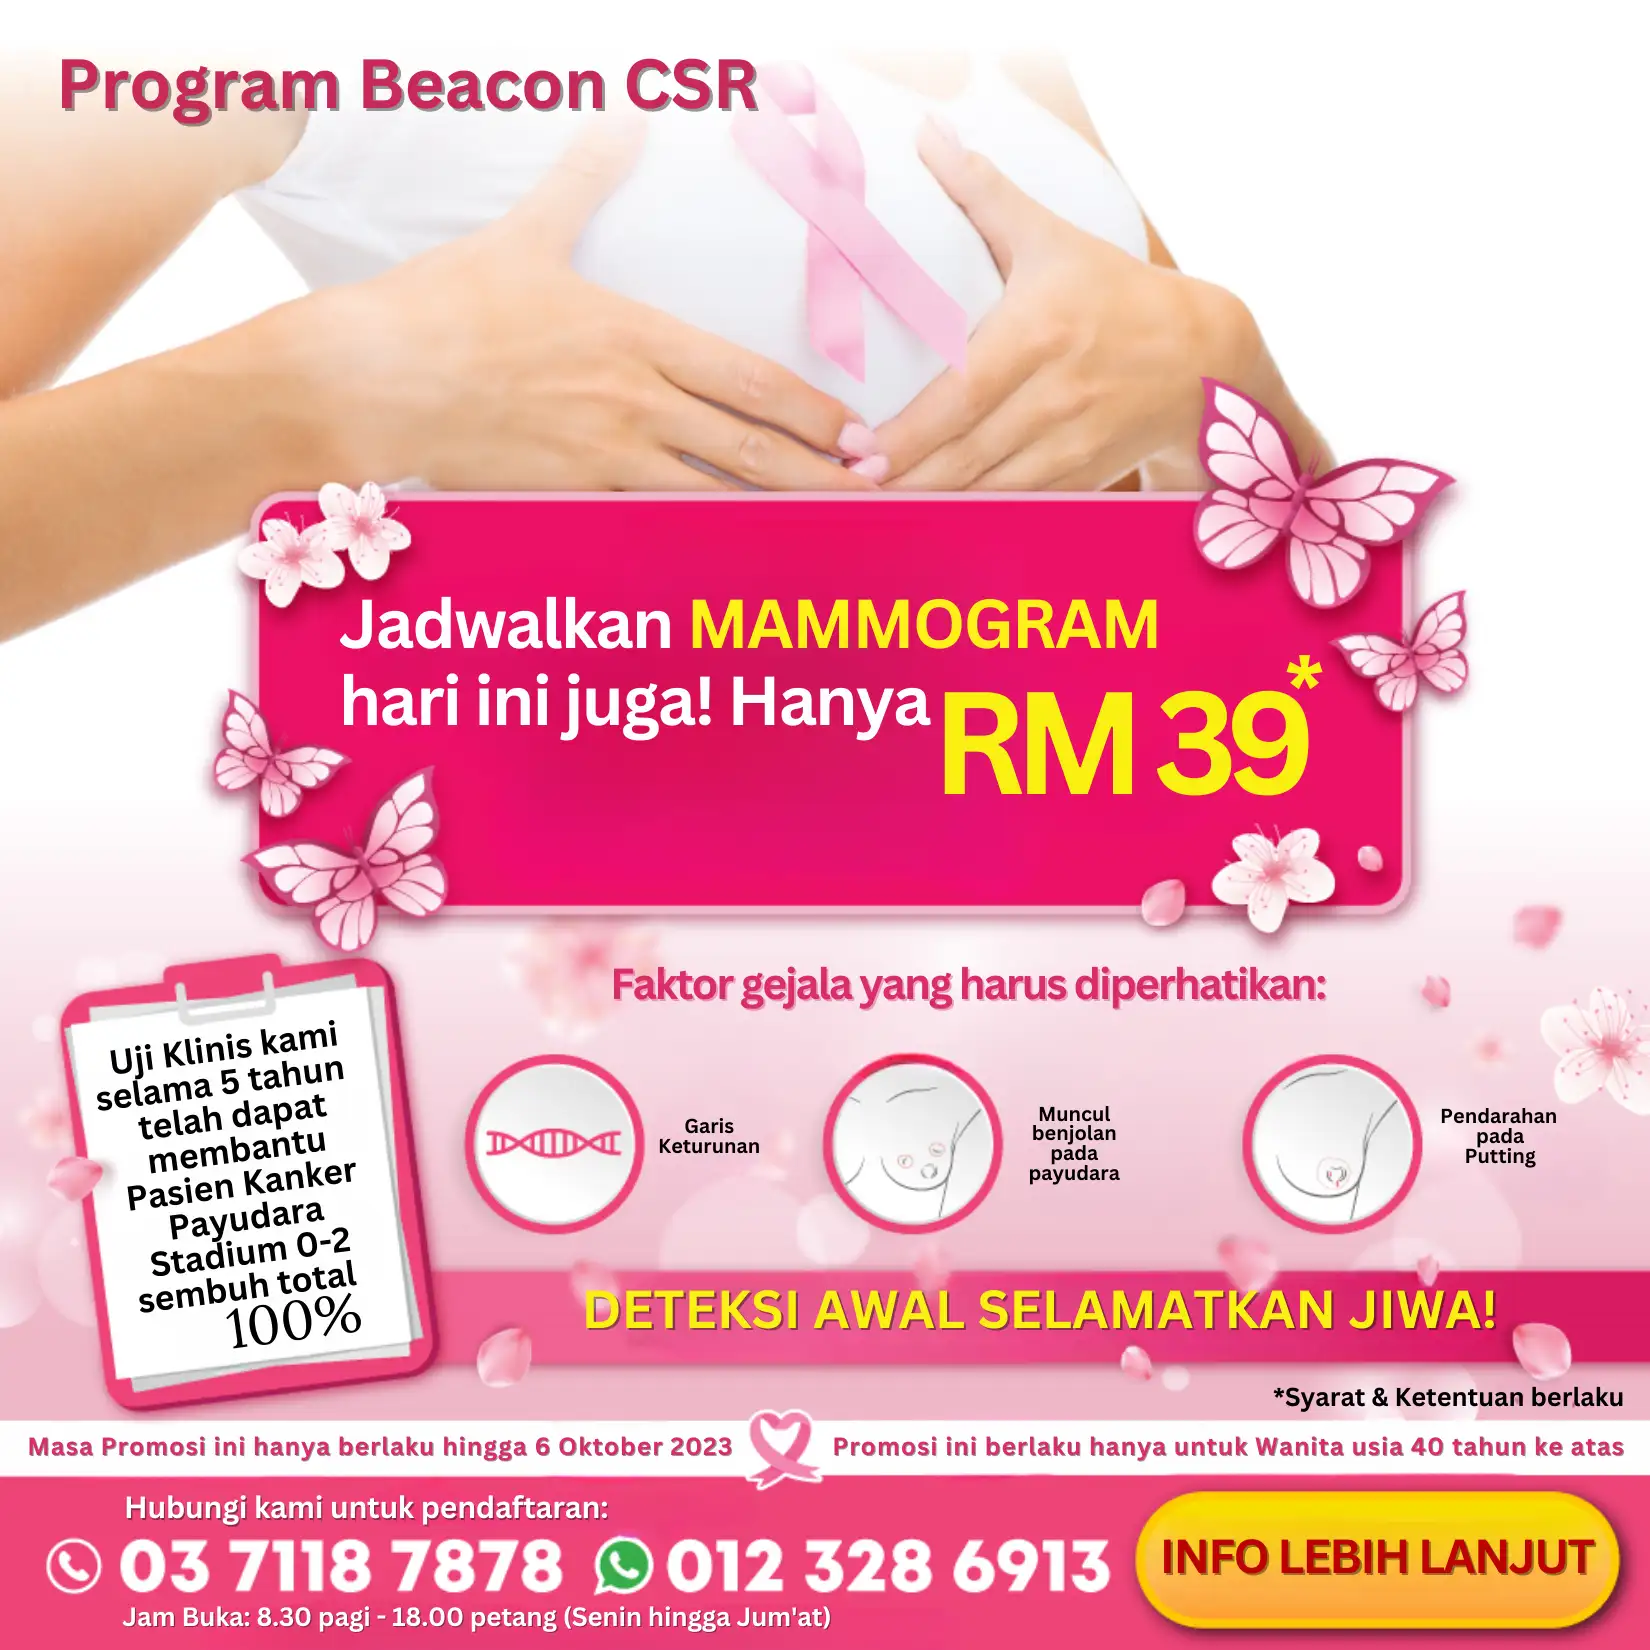 Mammogram-beacon-hospital-Indonesia-mobile